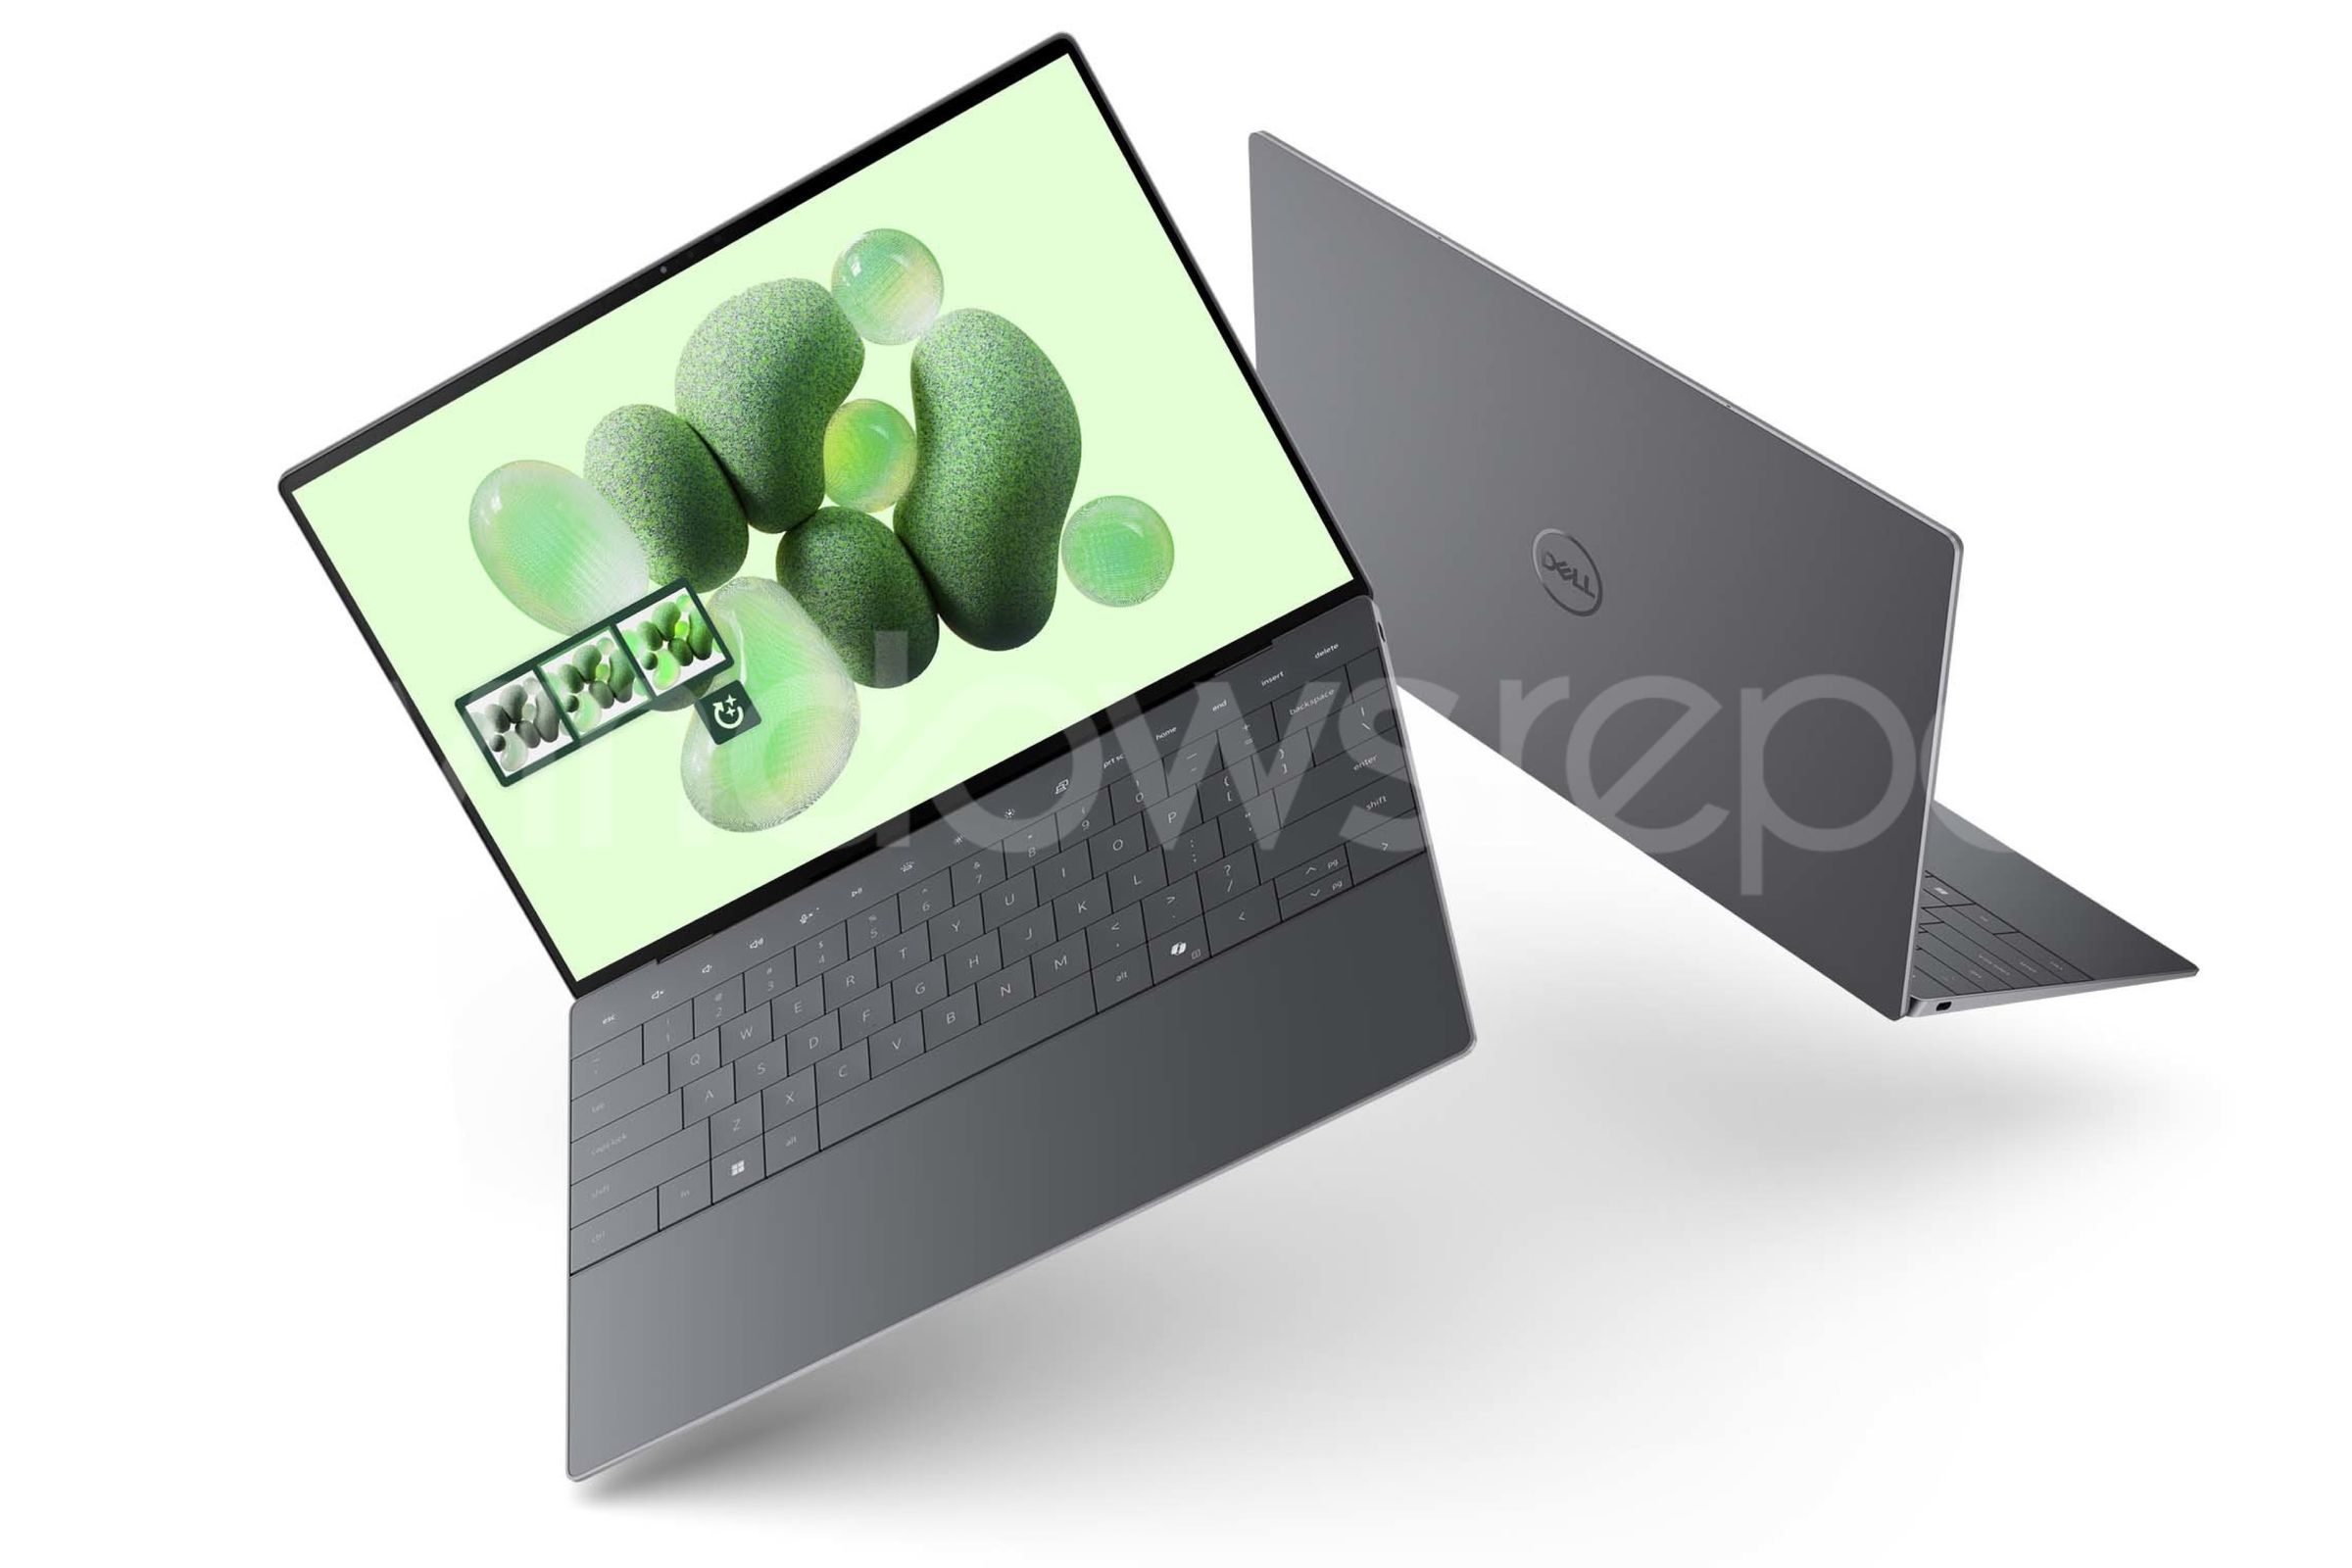 Laptop Dell melayang saling membelakangi dan terbuka menunjukkan ketipisannya, layar wallpaper hijau dengan balon, ada tombol copilot di baris bawah keyboard.